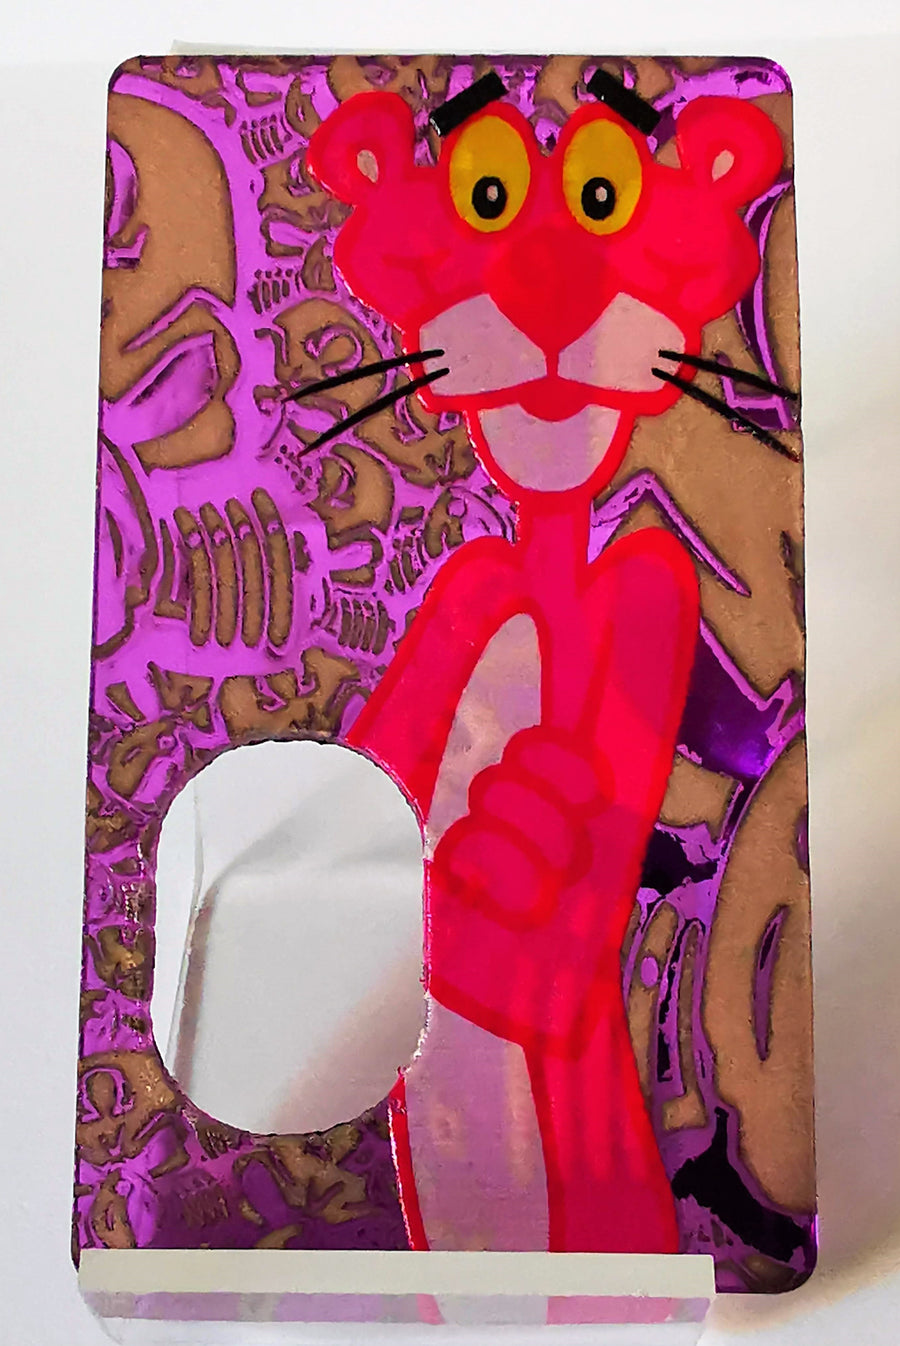 Porte gravée BF mod - Engraved BF Mod Panel - Pink Panther